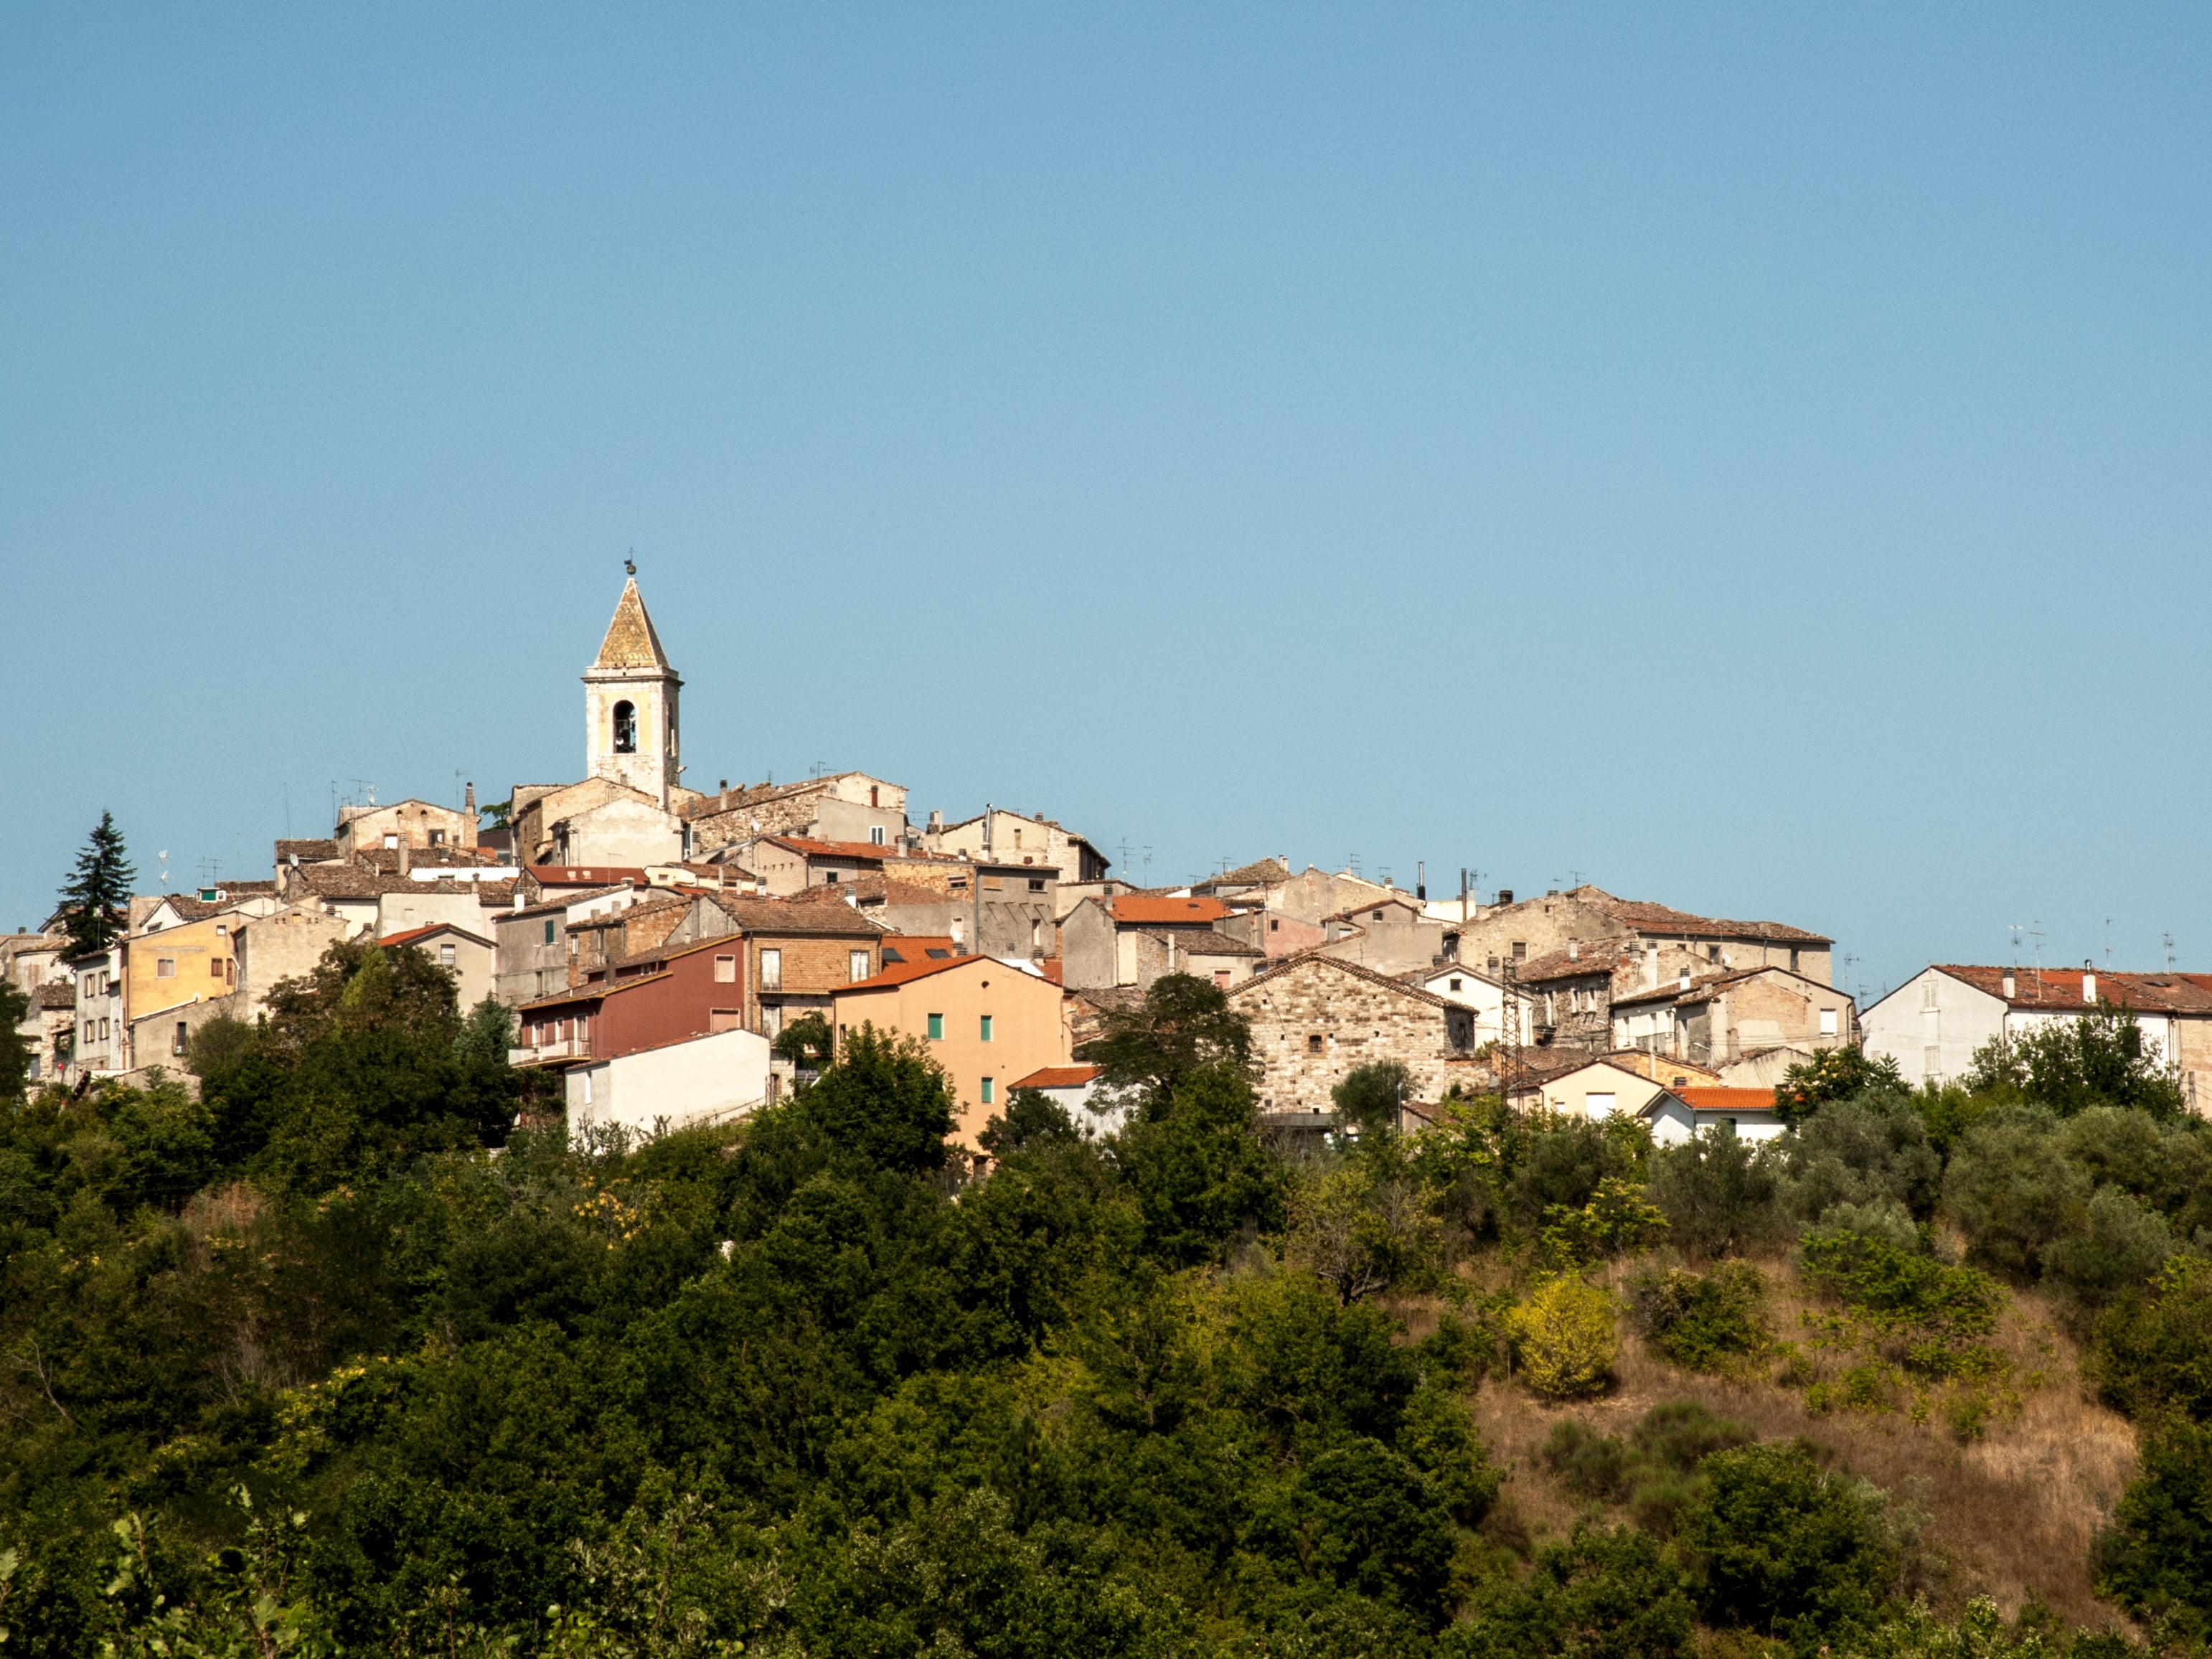 A view of the historic centre of San Giovanni in Galdo